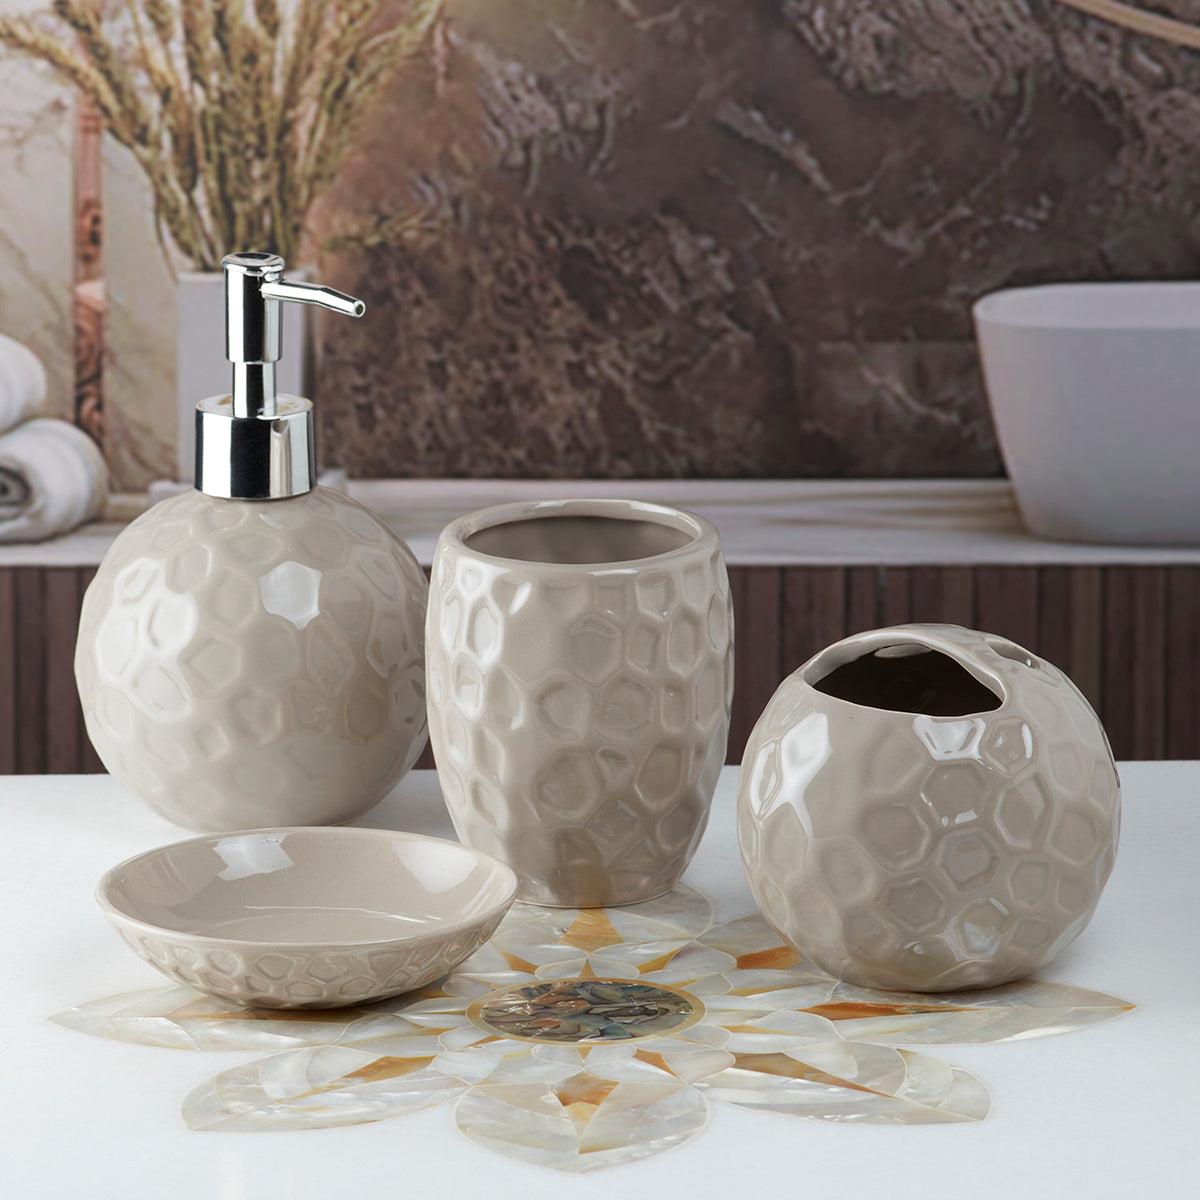 Ceramic Bathroom Accessories Set of 4 Bath Set with Soap Dispenser (8205)